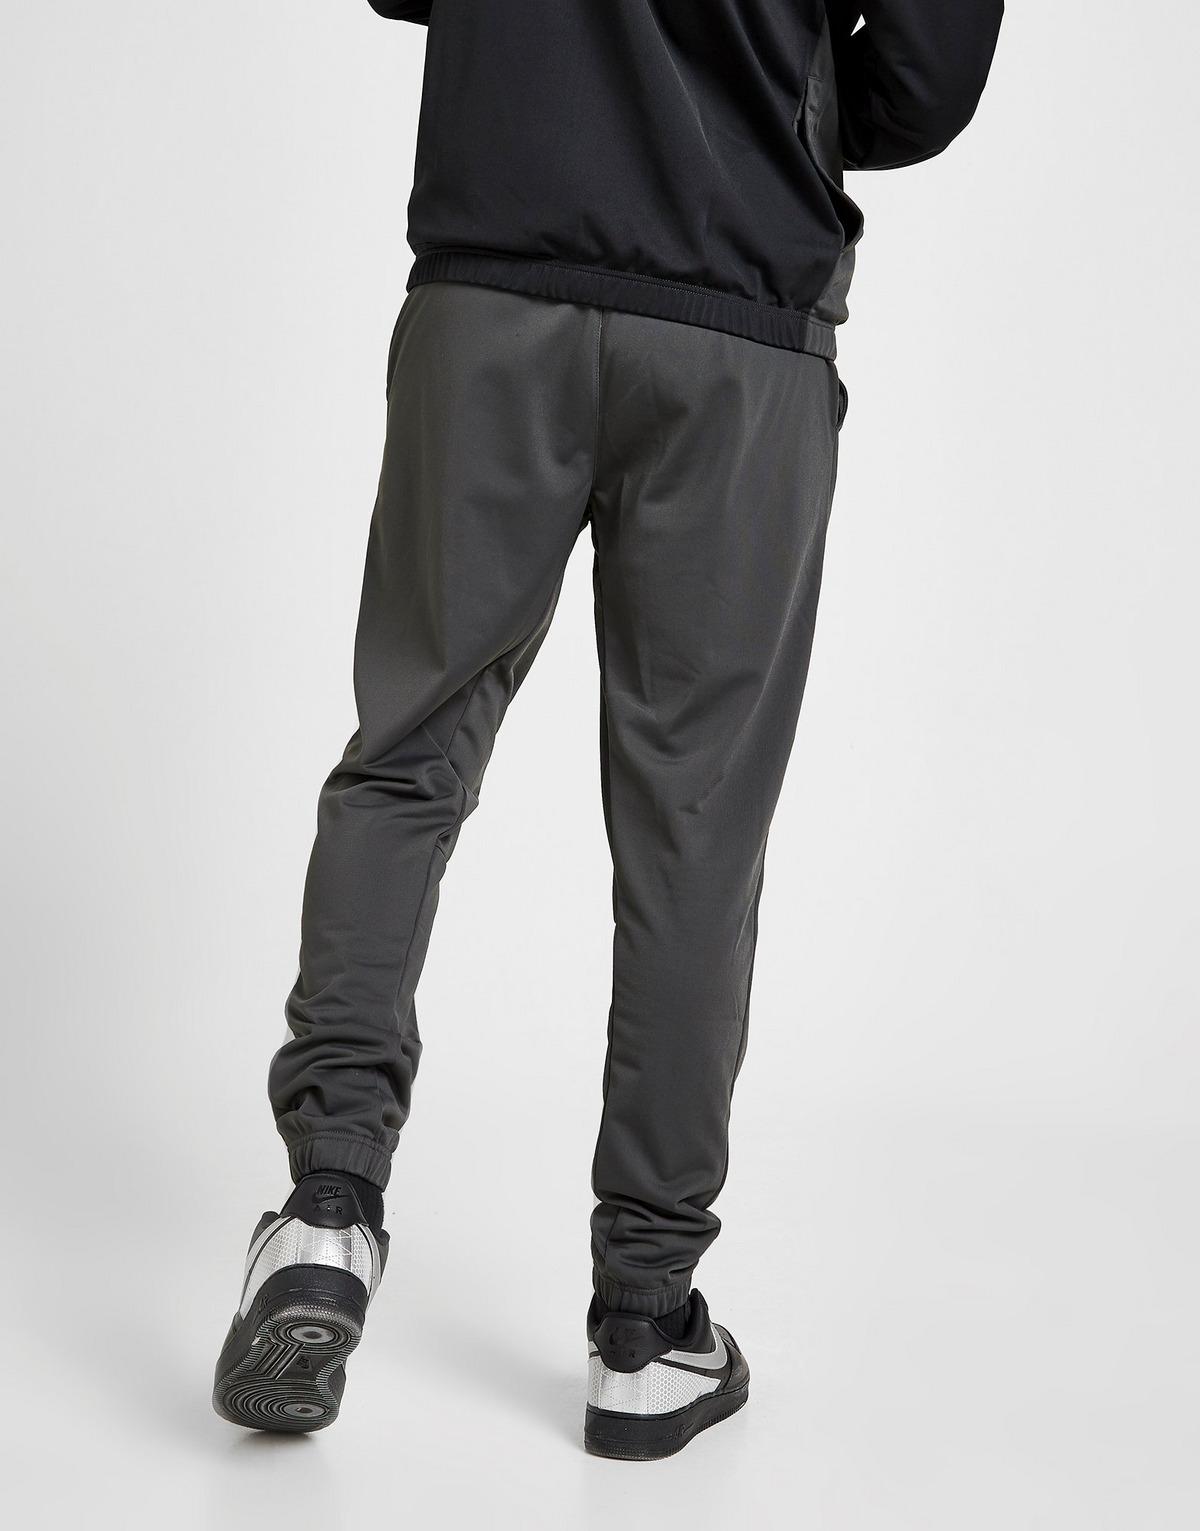 Nike Grey Poly Track Pants Denmark, SAVE 40% - mpgc.net